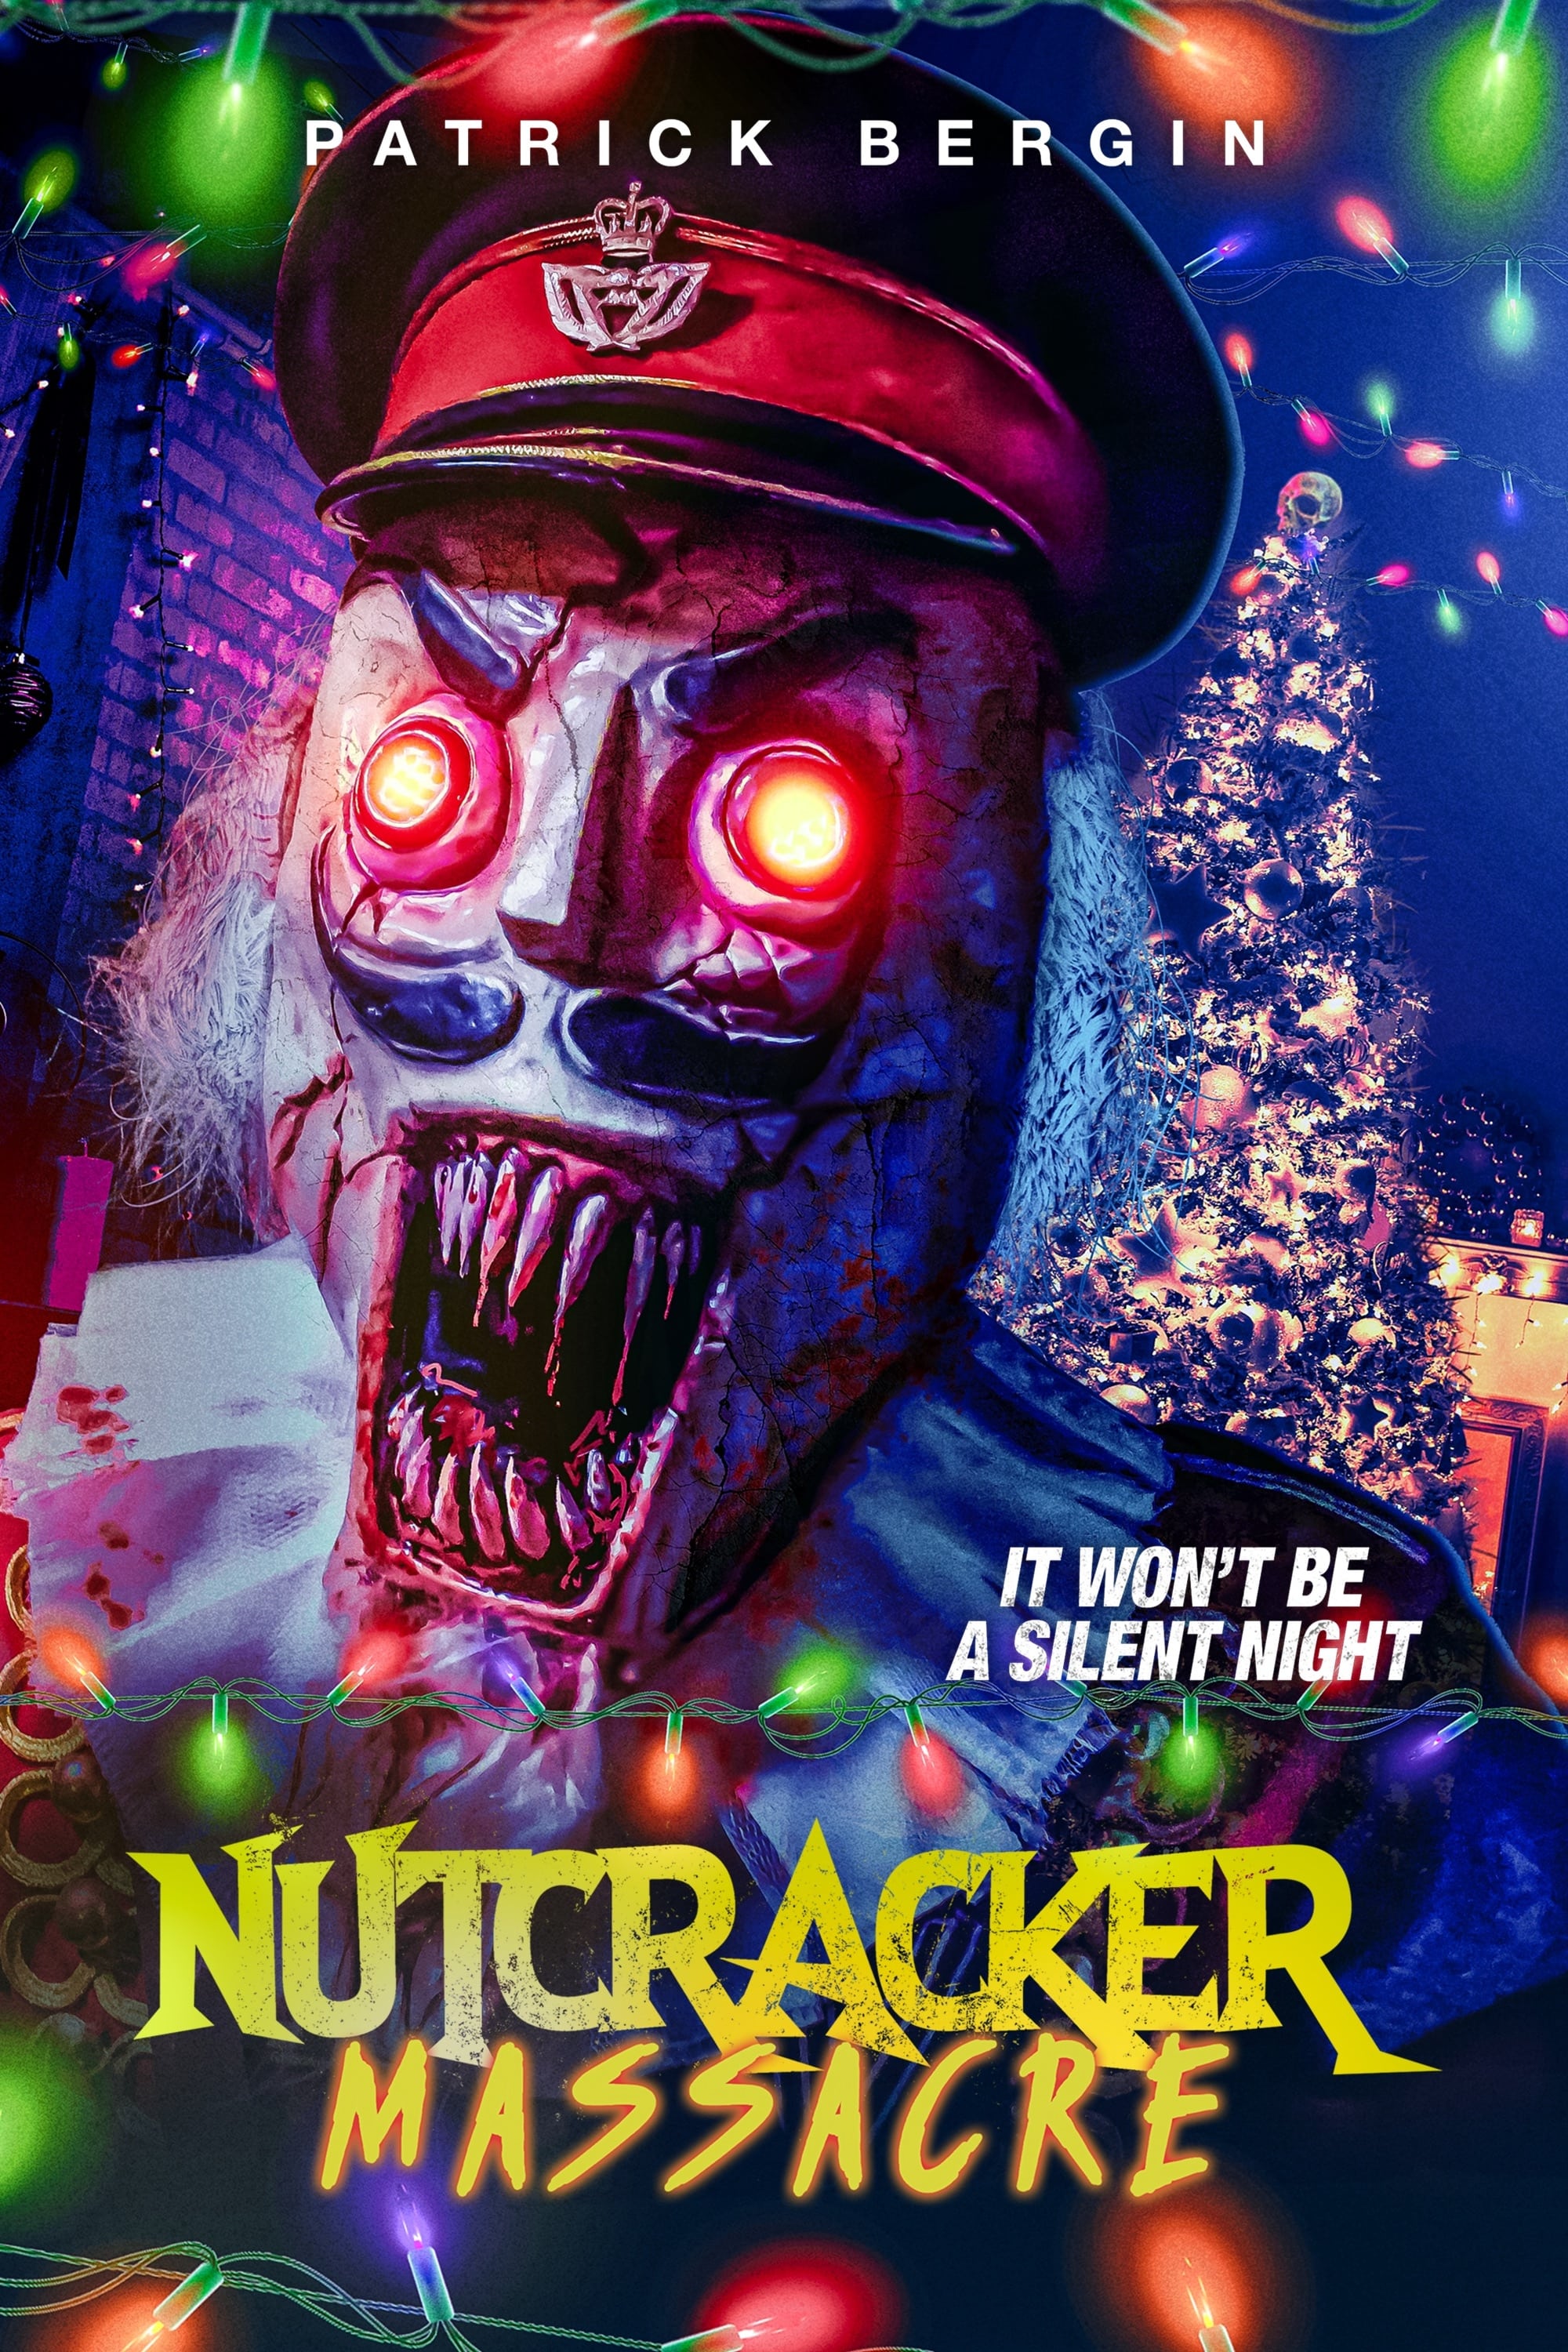 Nutcracker Massacre film